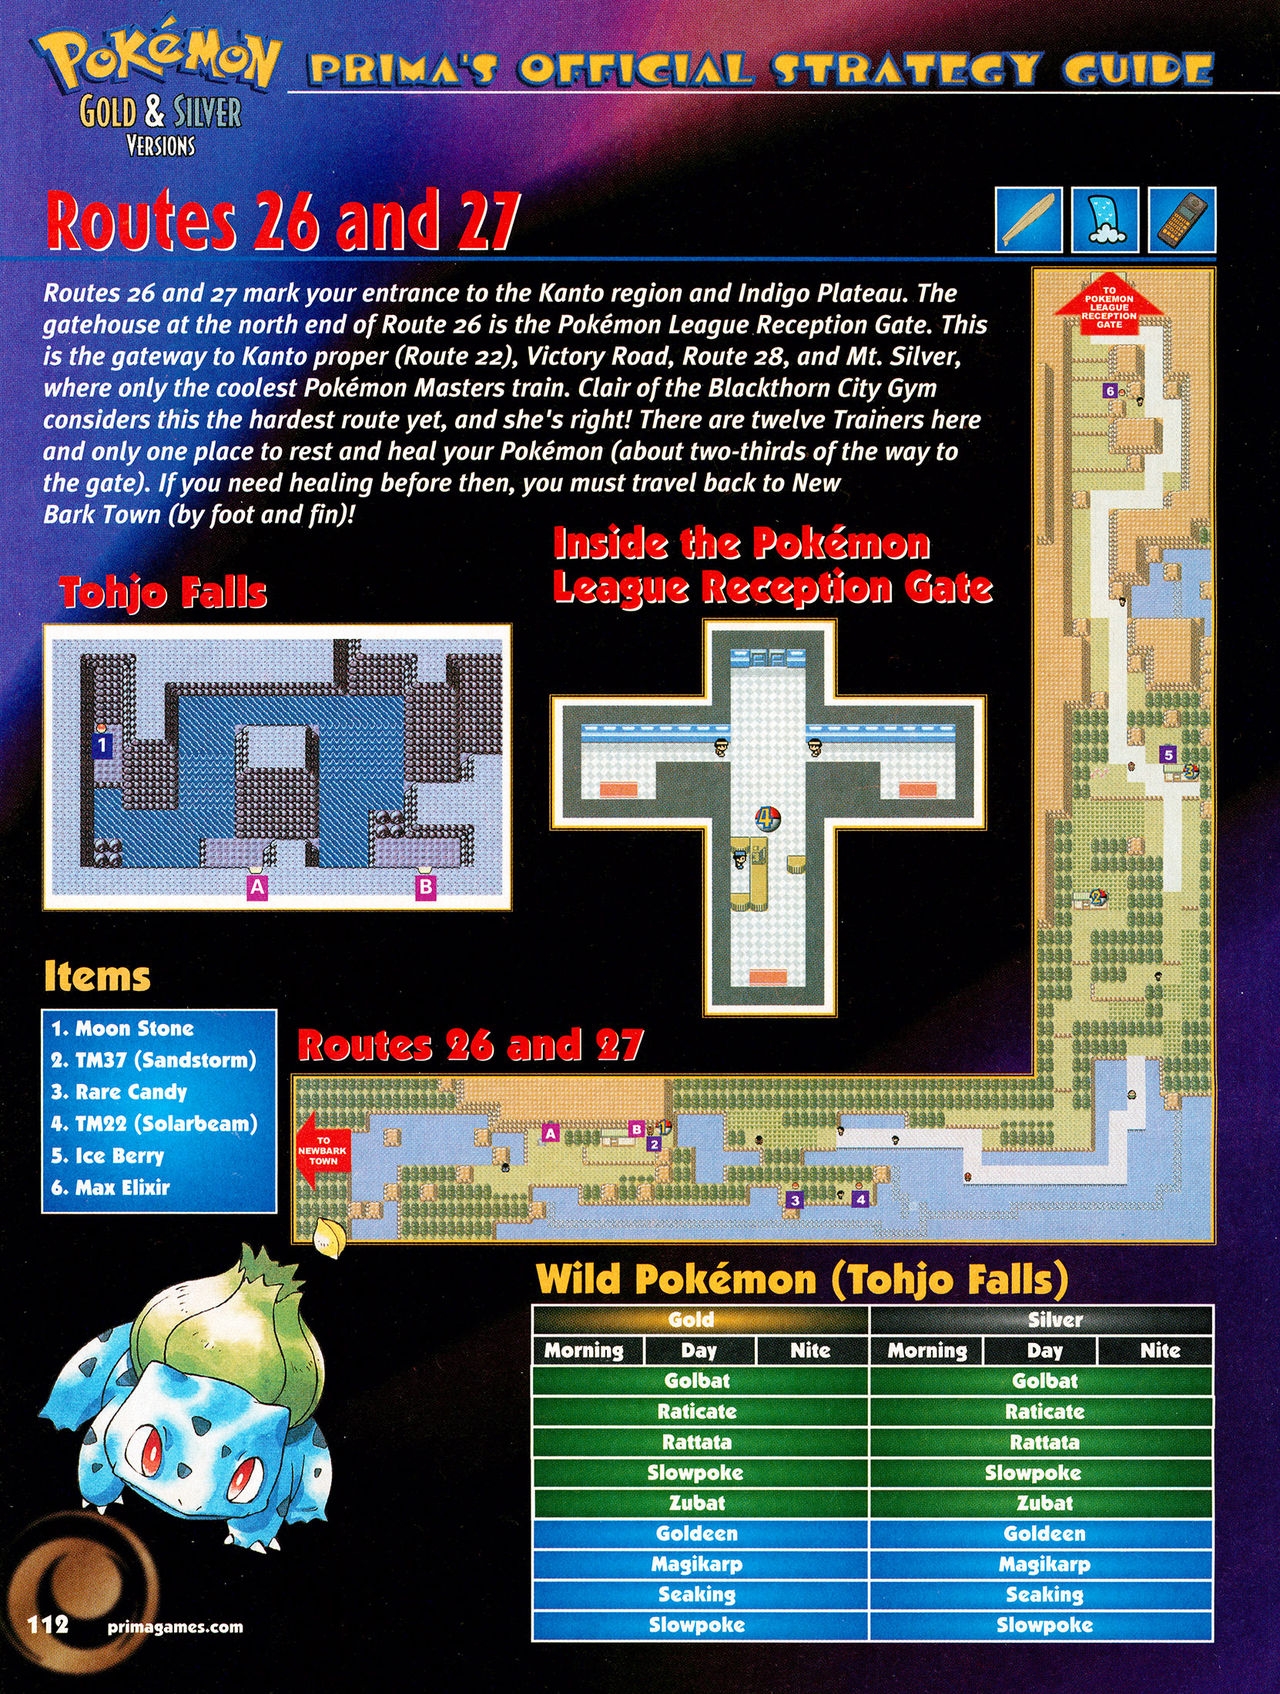 Pokémon Gold & Silver Versions - Strategy Guide 113